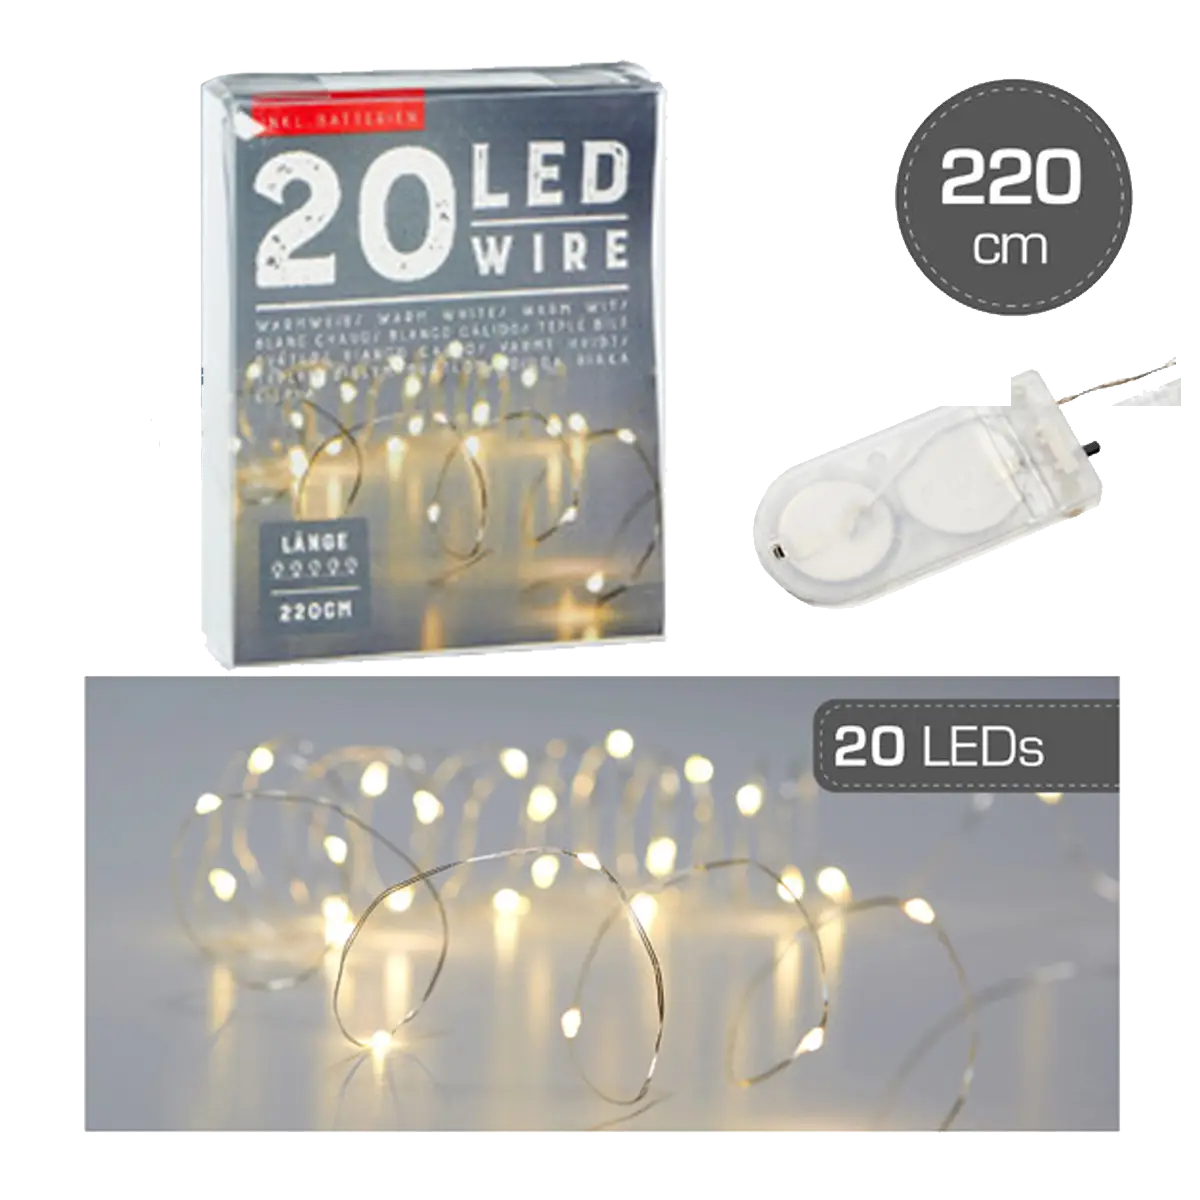 LED Fairy Lights, LED Wire, 20 lights, 220 cm